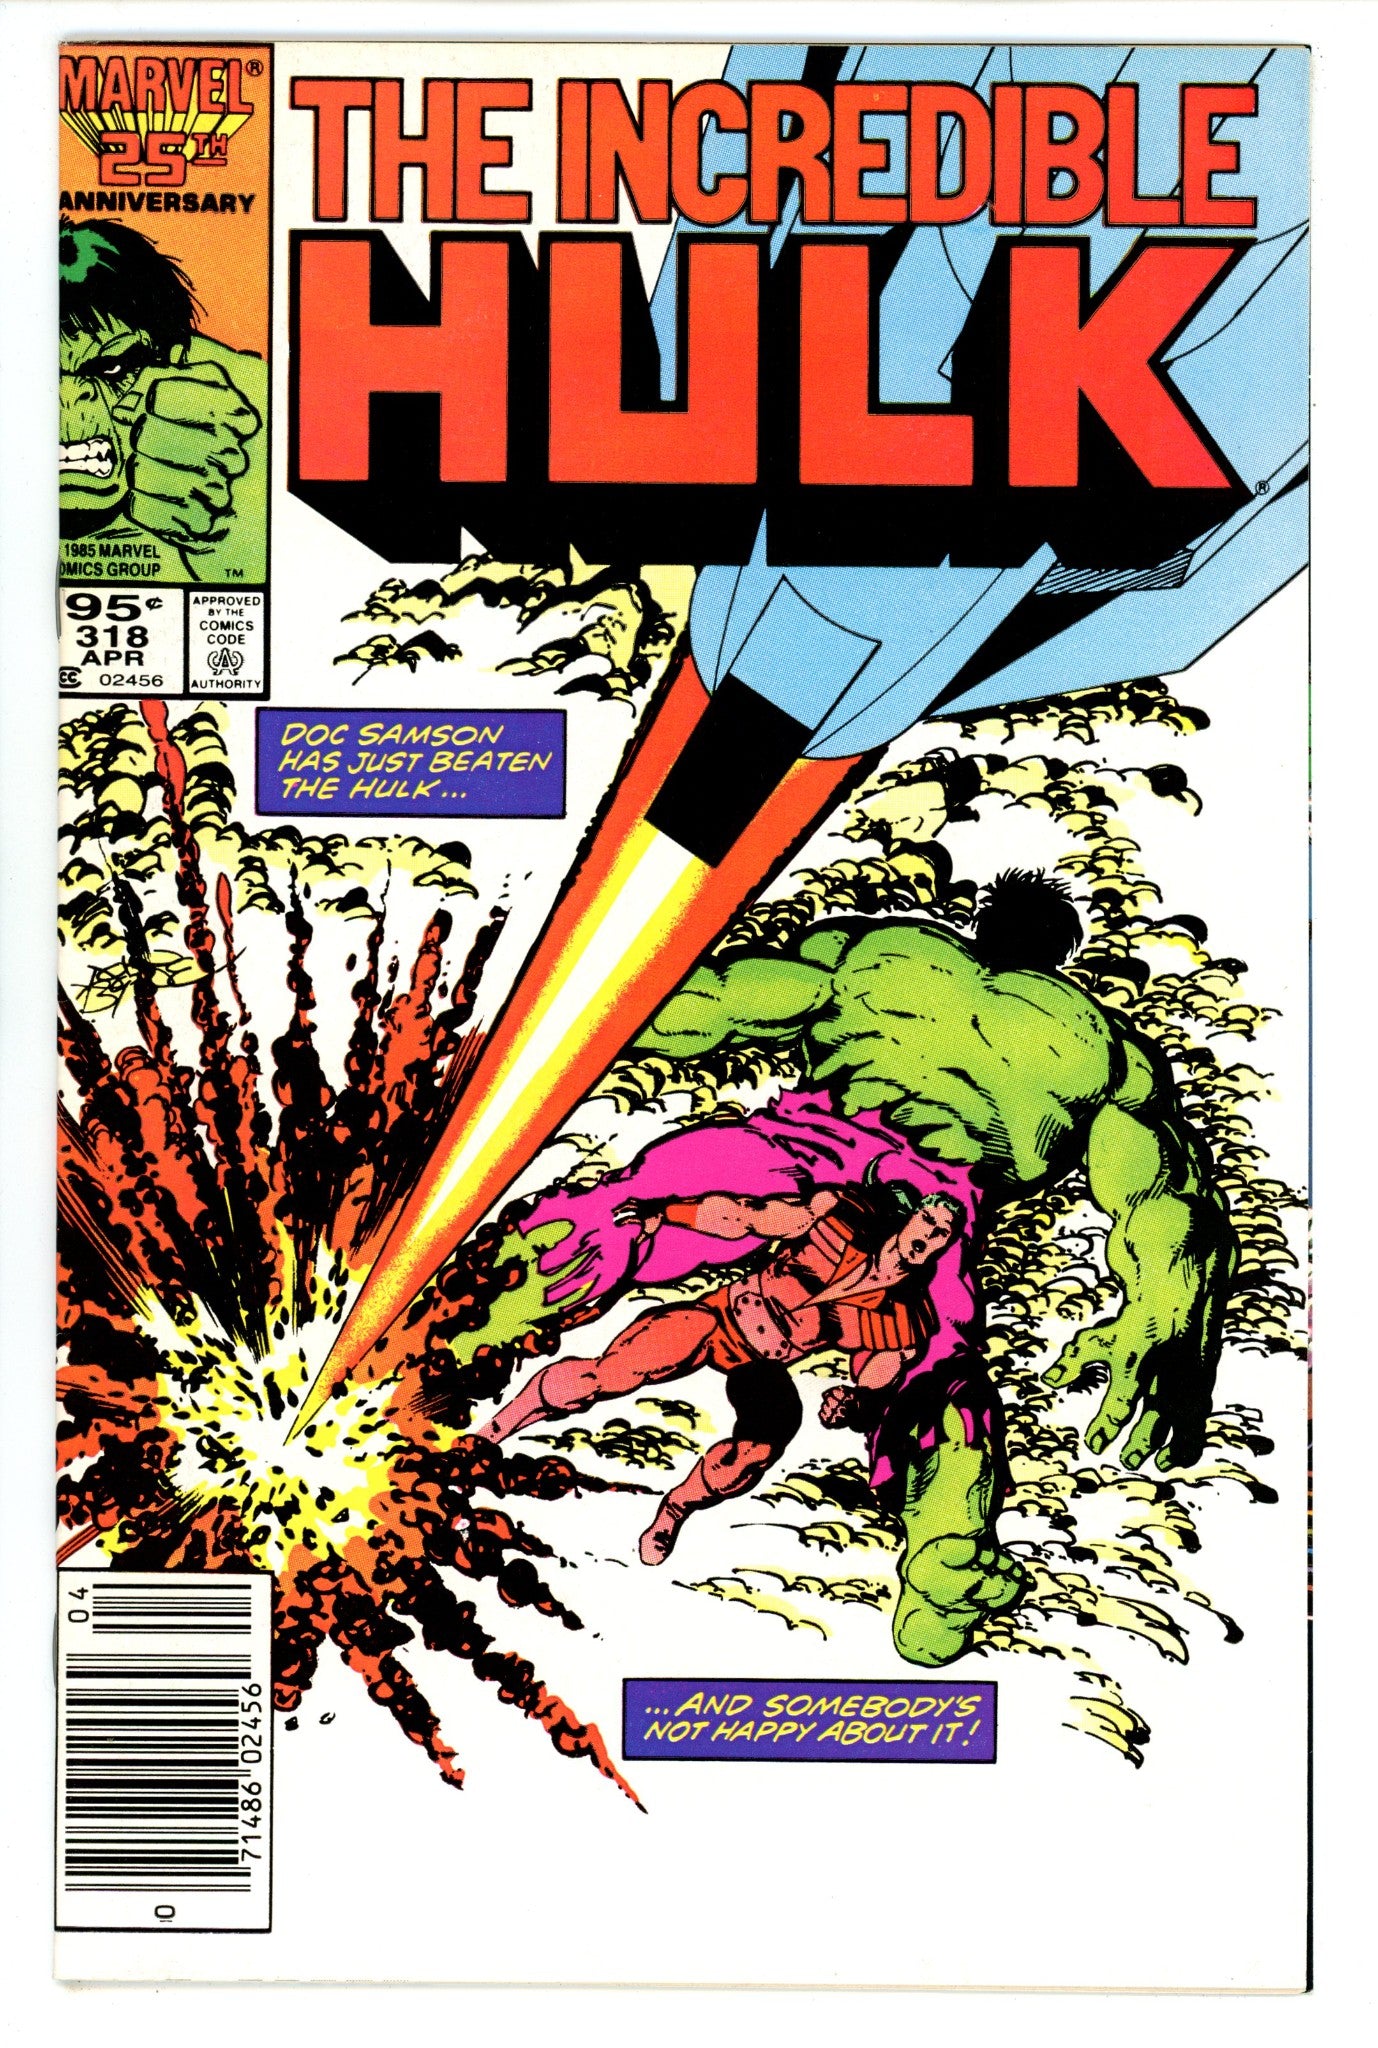 The Incredible Hulk Vol 1 318 VF+ (8.5) (1986) Canadian Price Variant 